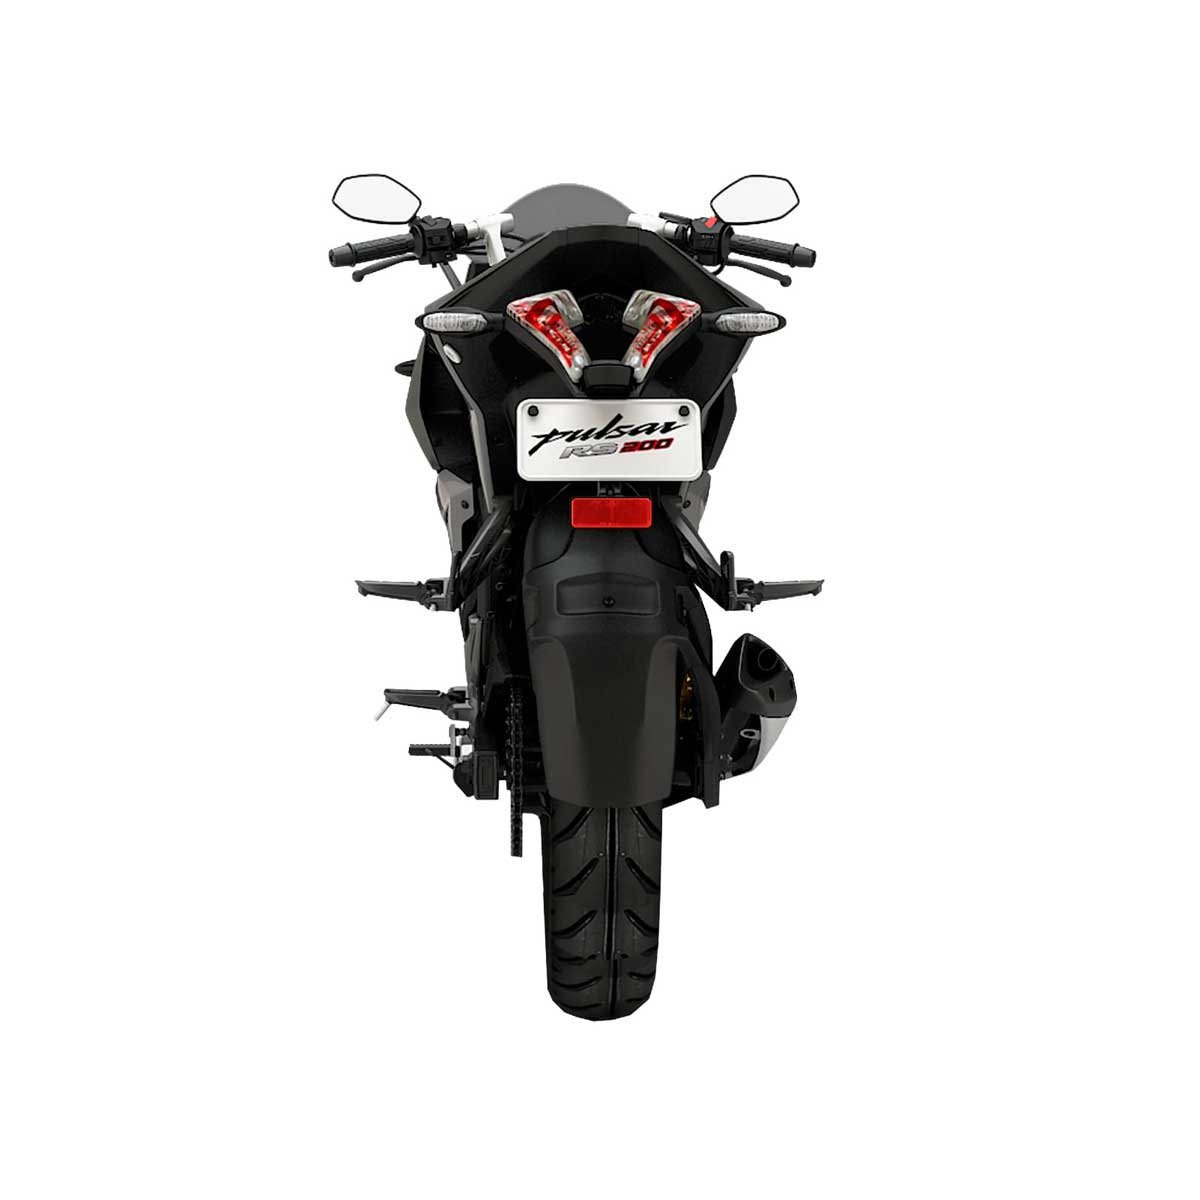 Motocicleta Pulsar Rs 200 Cc Negra Bajaj